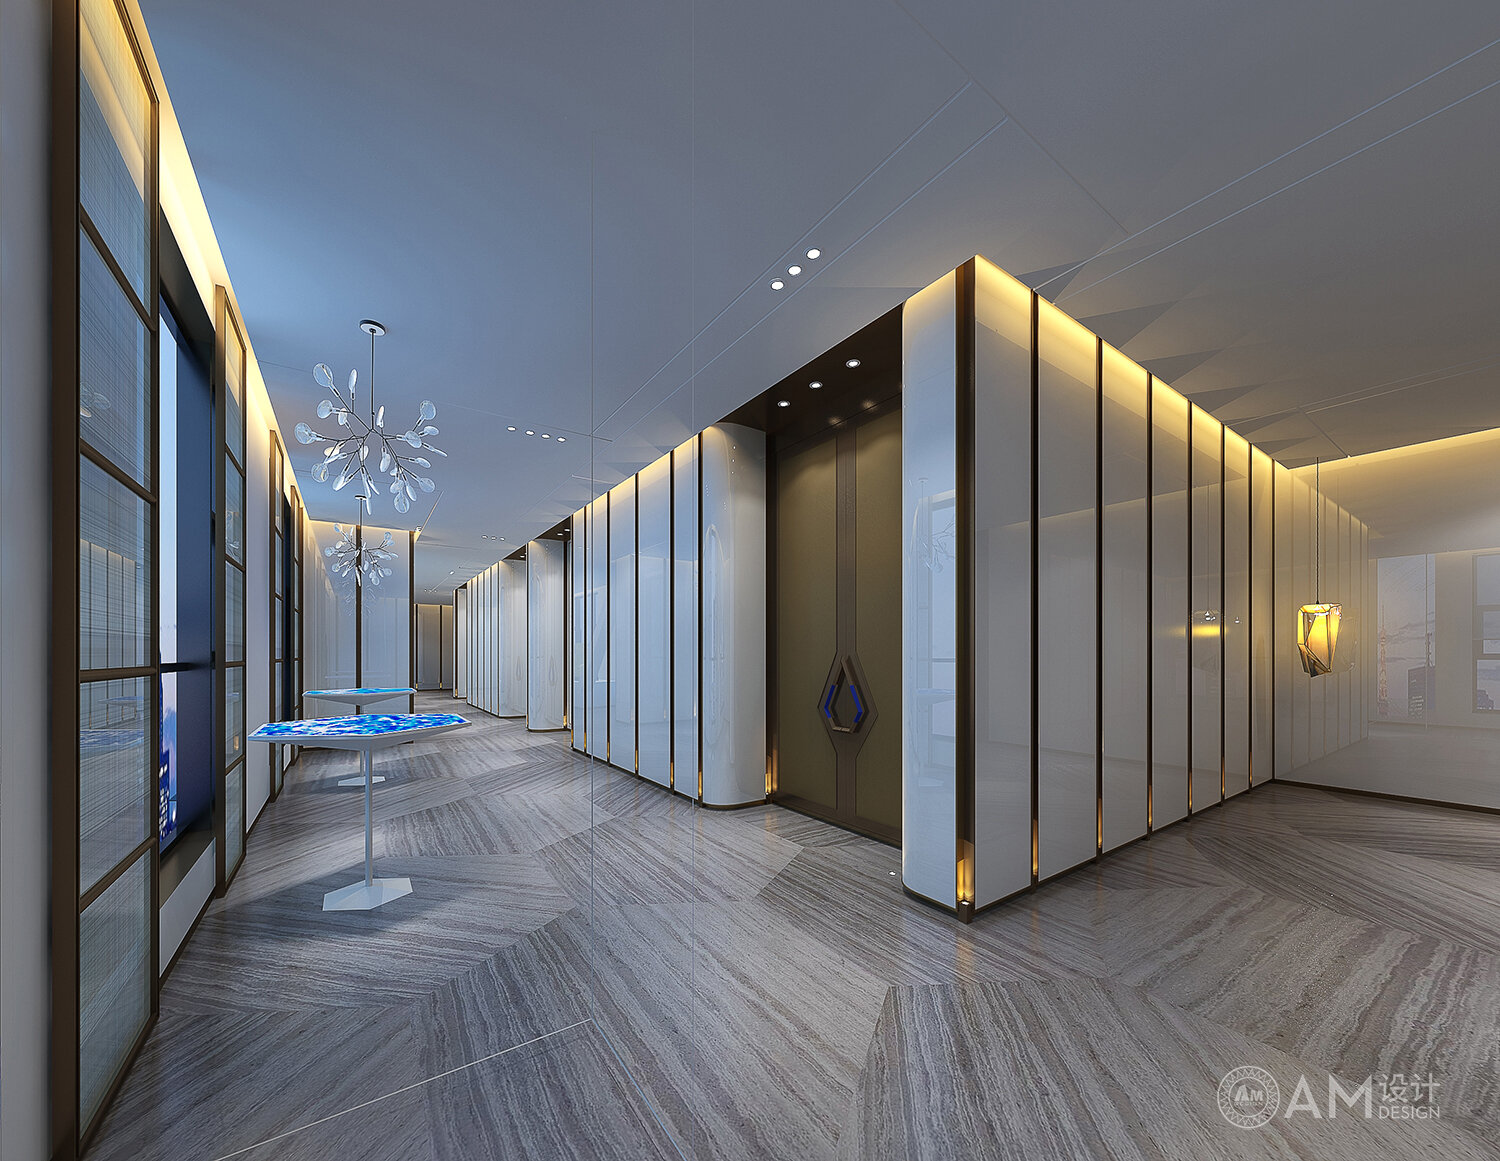 AM DESIGN | Corridor design of Jinpan hotel in Xi'an